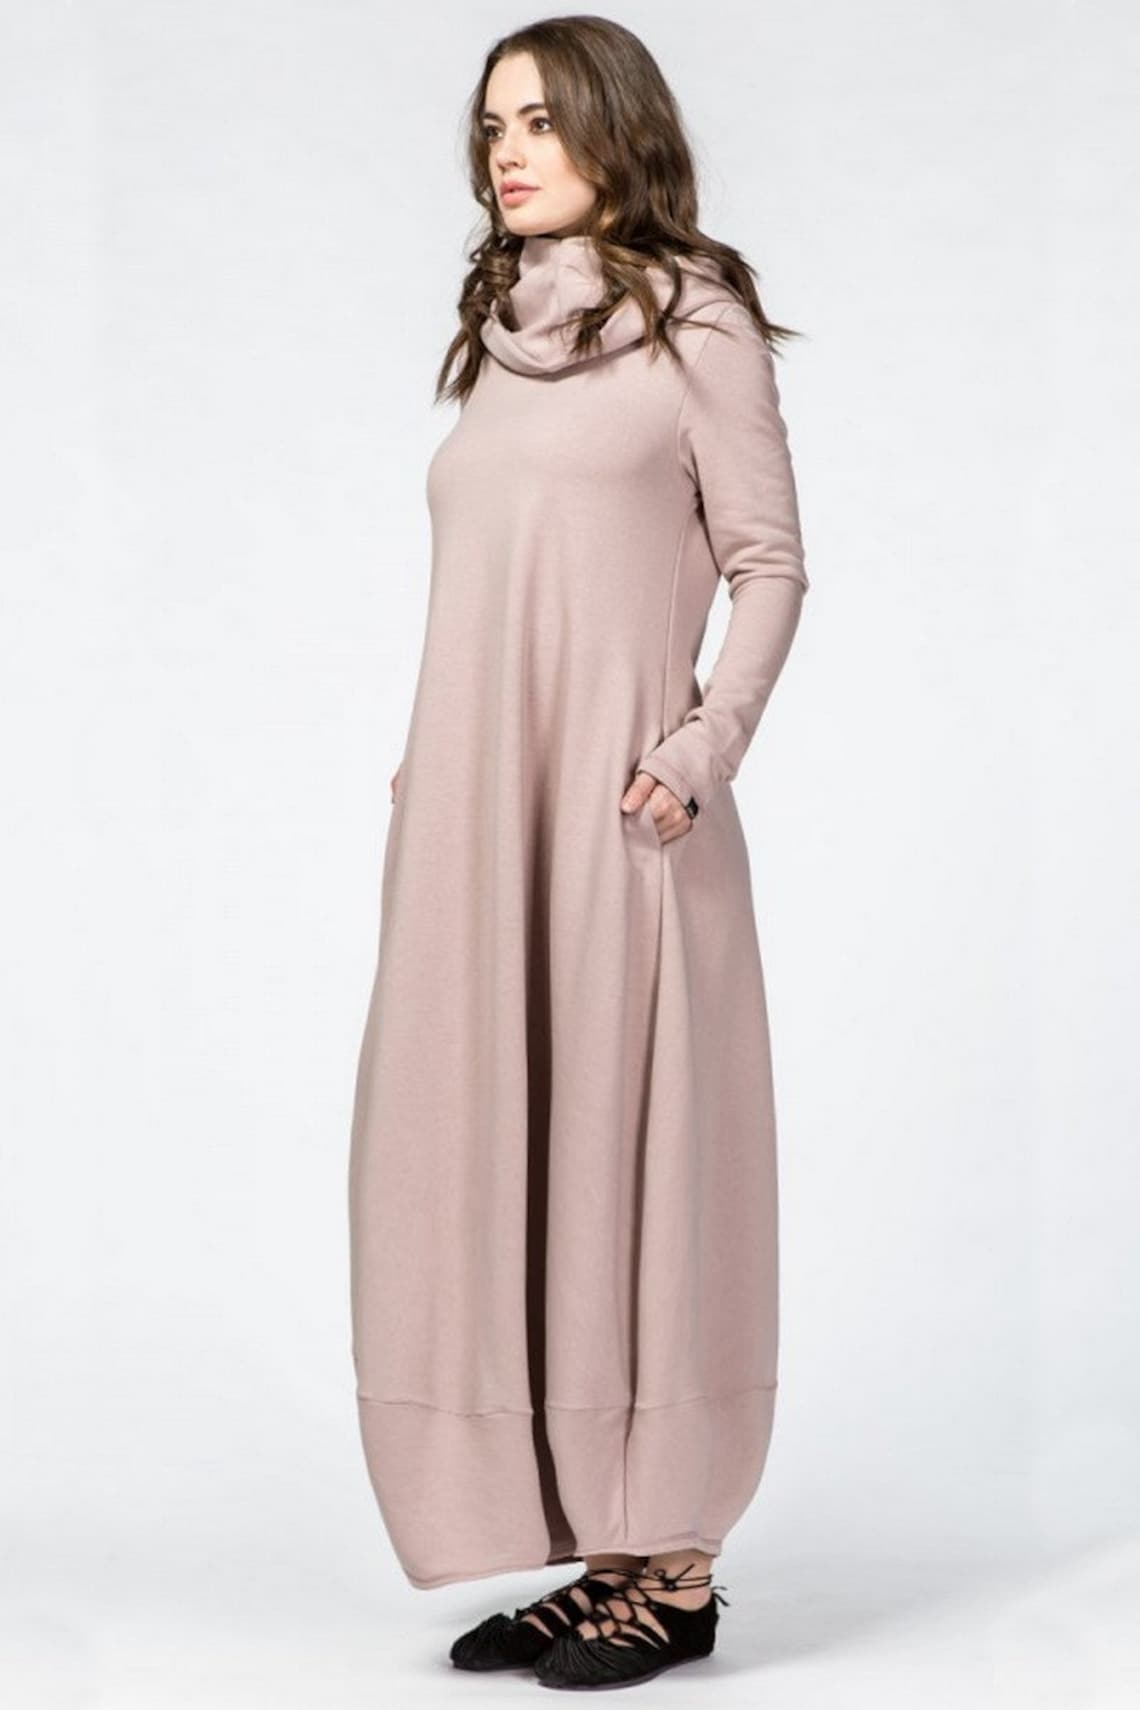 Boho Maxi Cotton Dress Hooded Cotton Dress Plus Size Cotton | Etsy